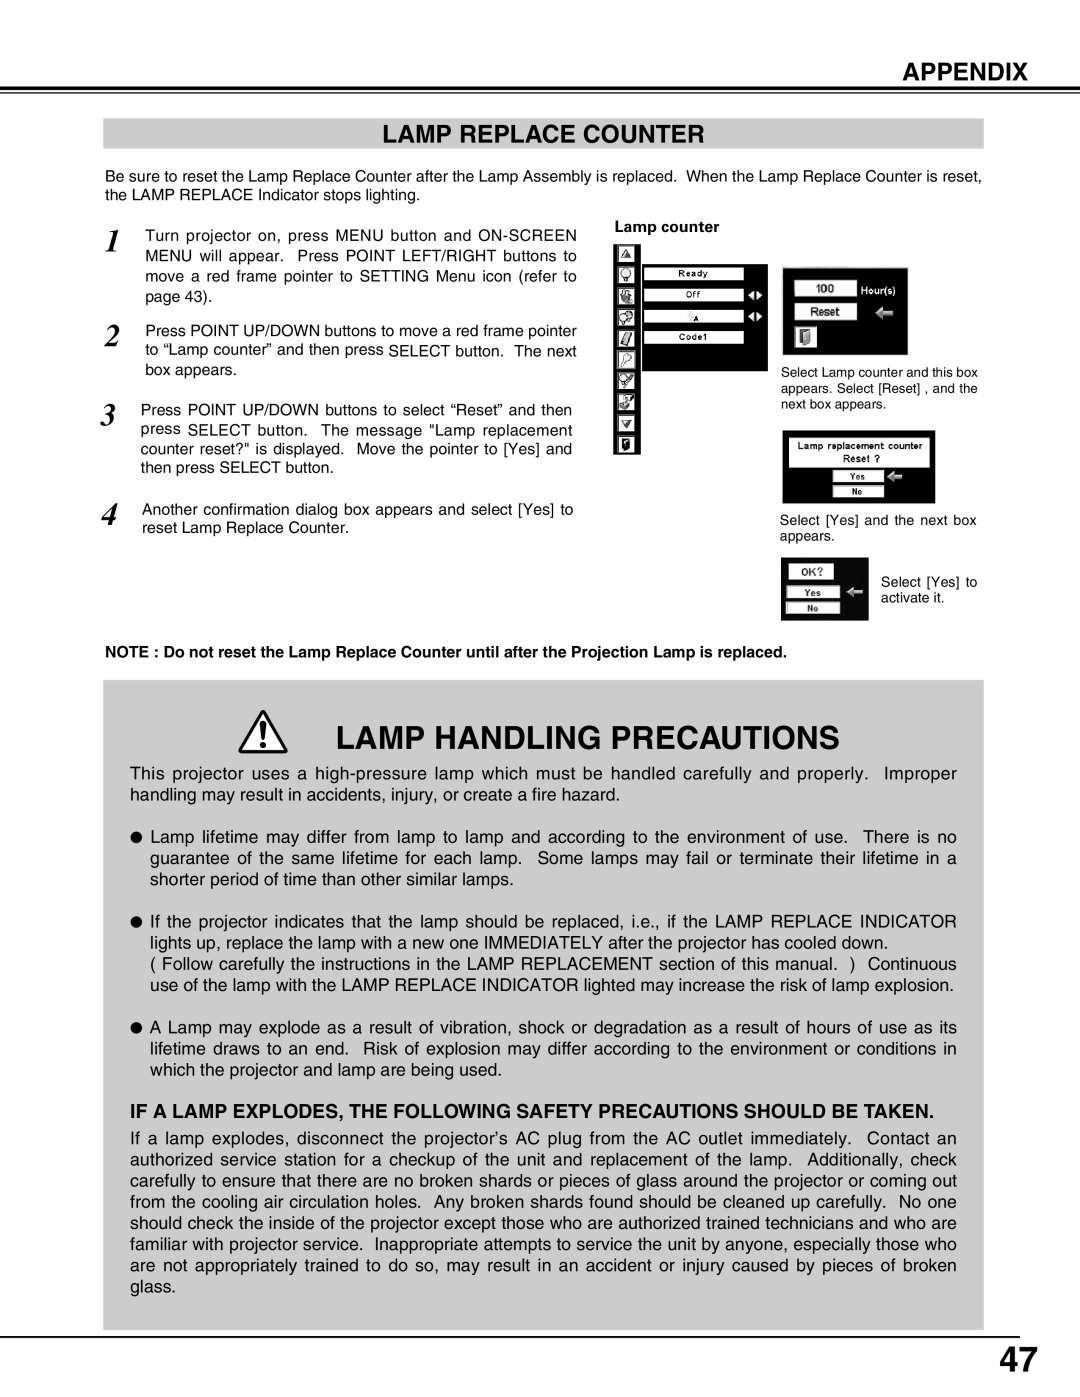 Eiki LC-W3 instruction manual Lamp Handling Precautions, Appendix Lamp Replace Counter 